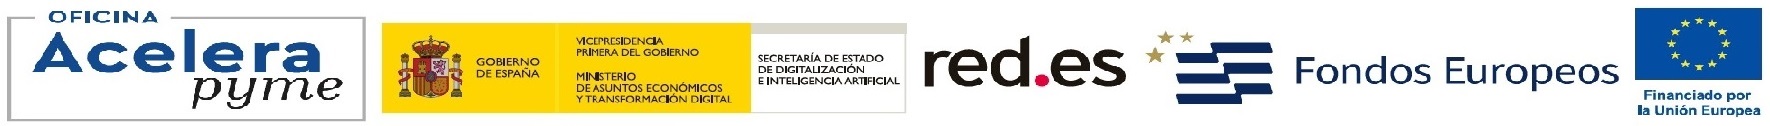 Web oficinas Acelera Pyme Rural Cádiz